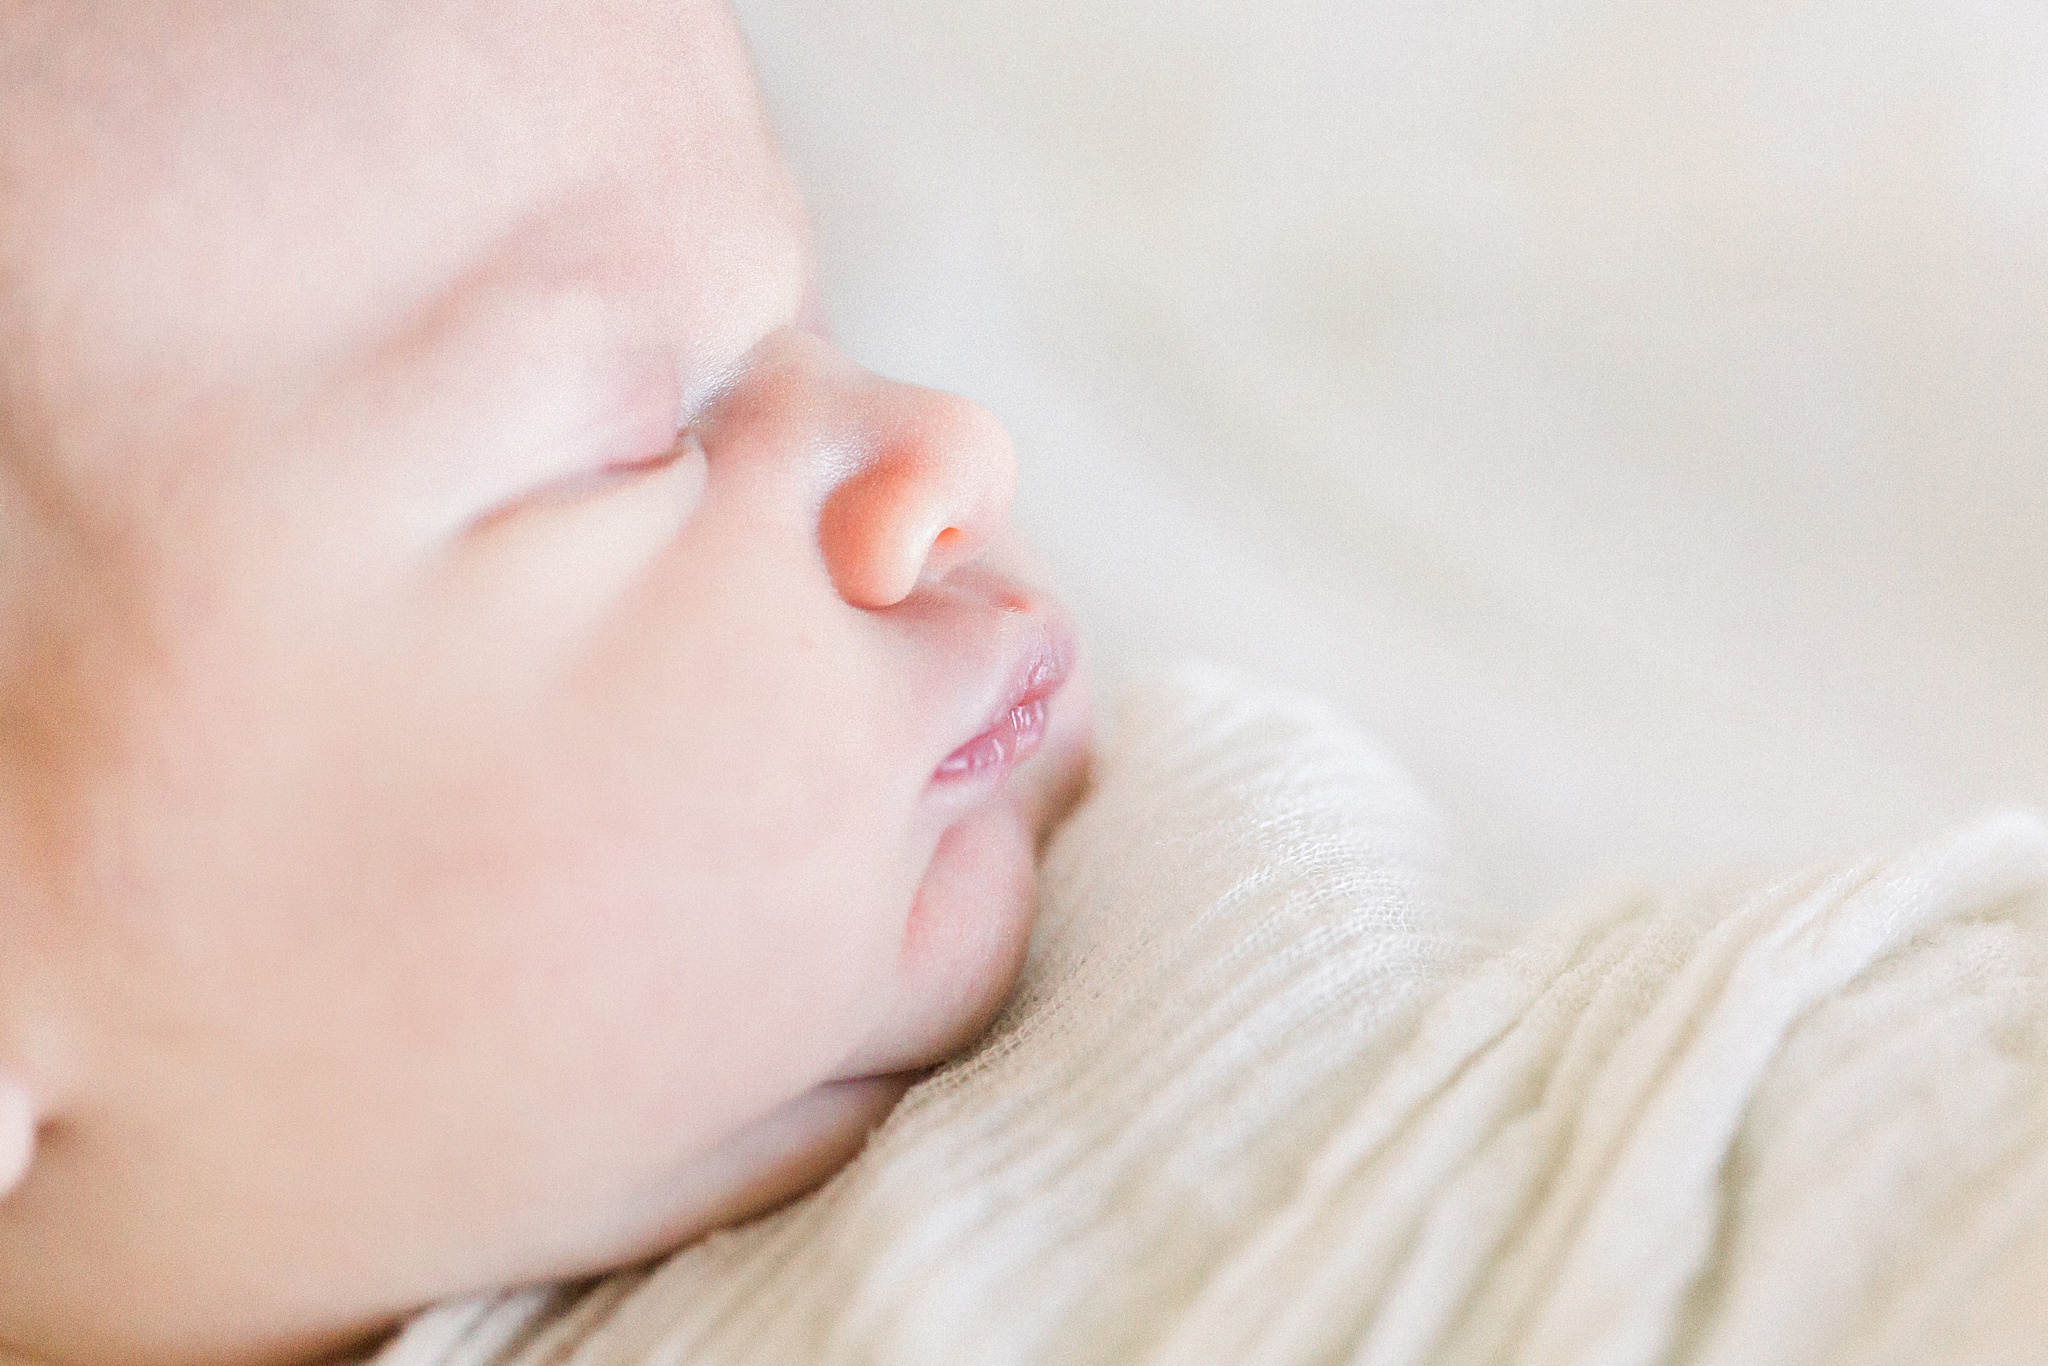 Aly-Kirk-Photo-Blakely-Reese-Baby-Girl-Newborn-Daughter